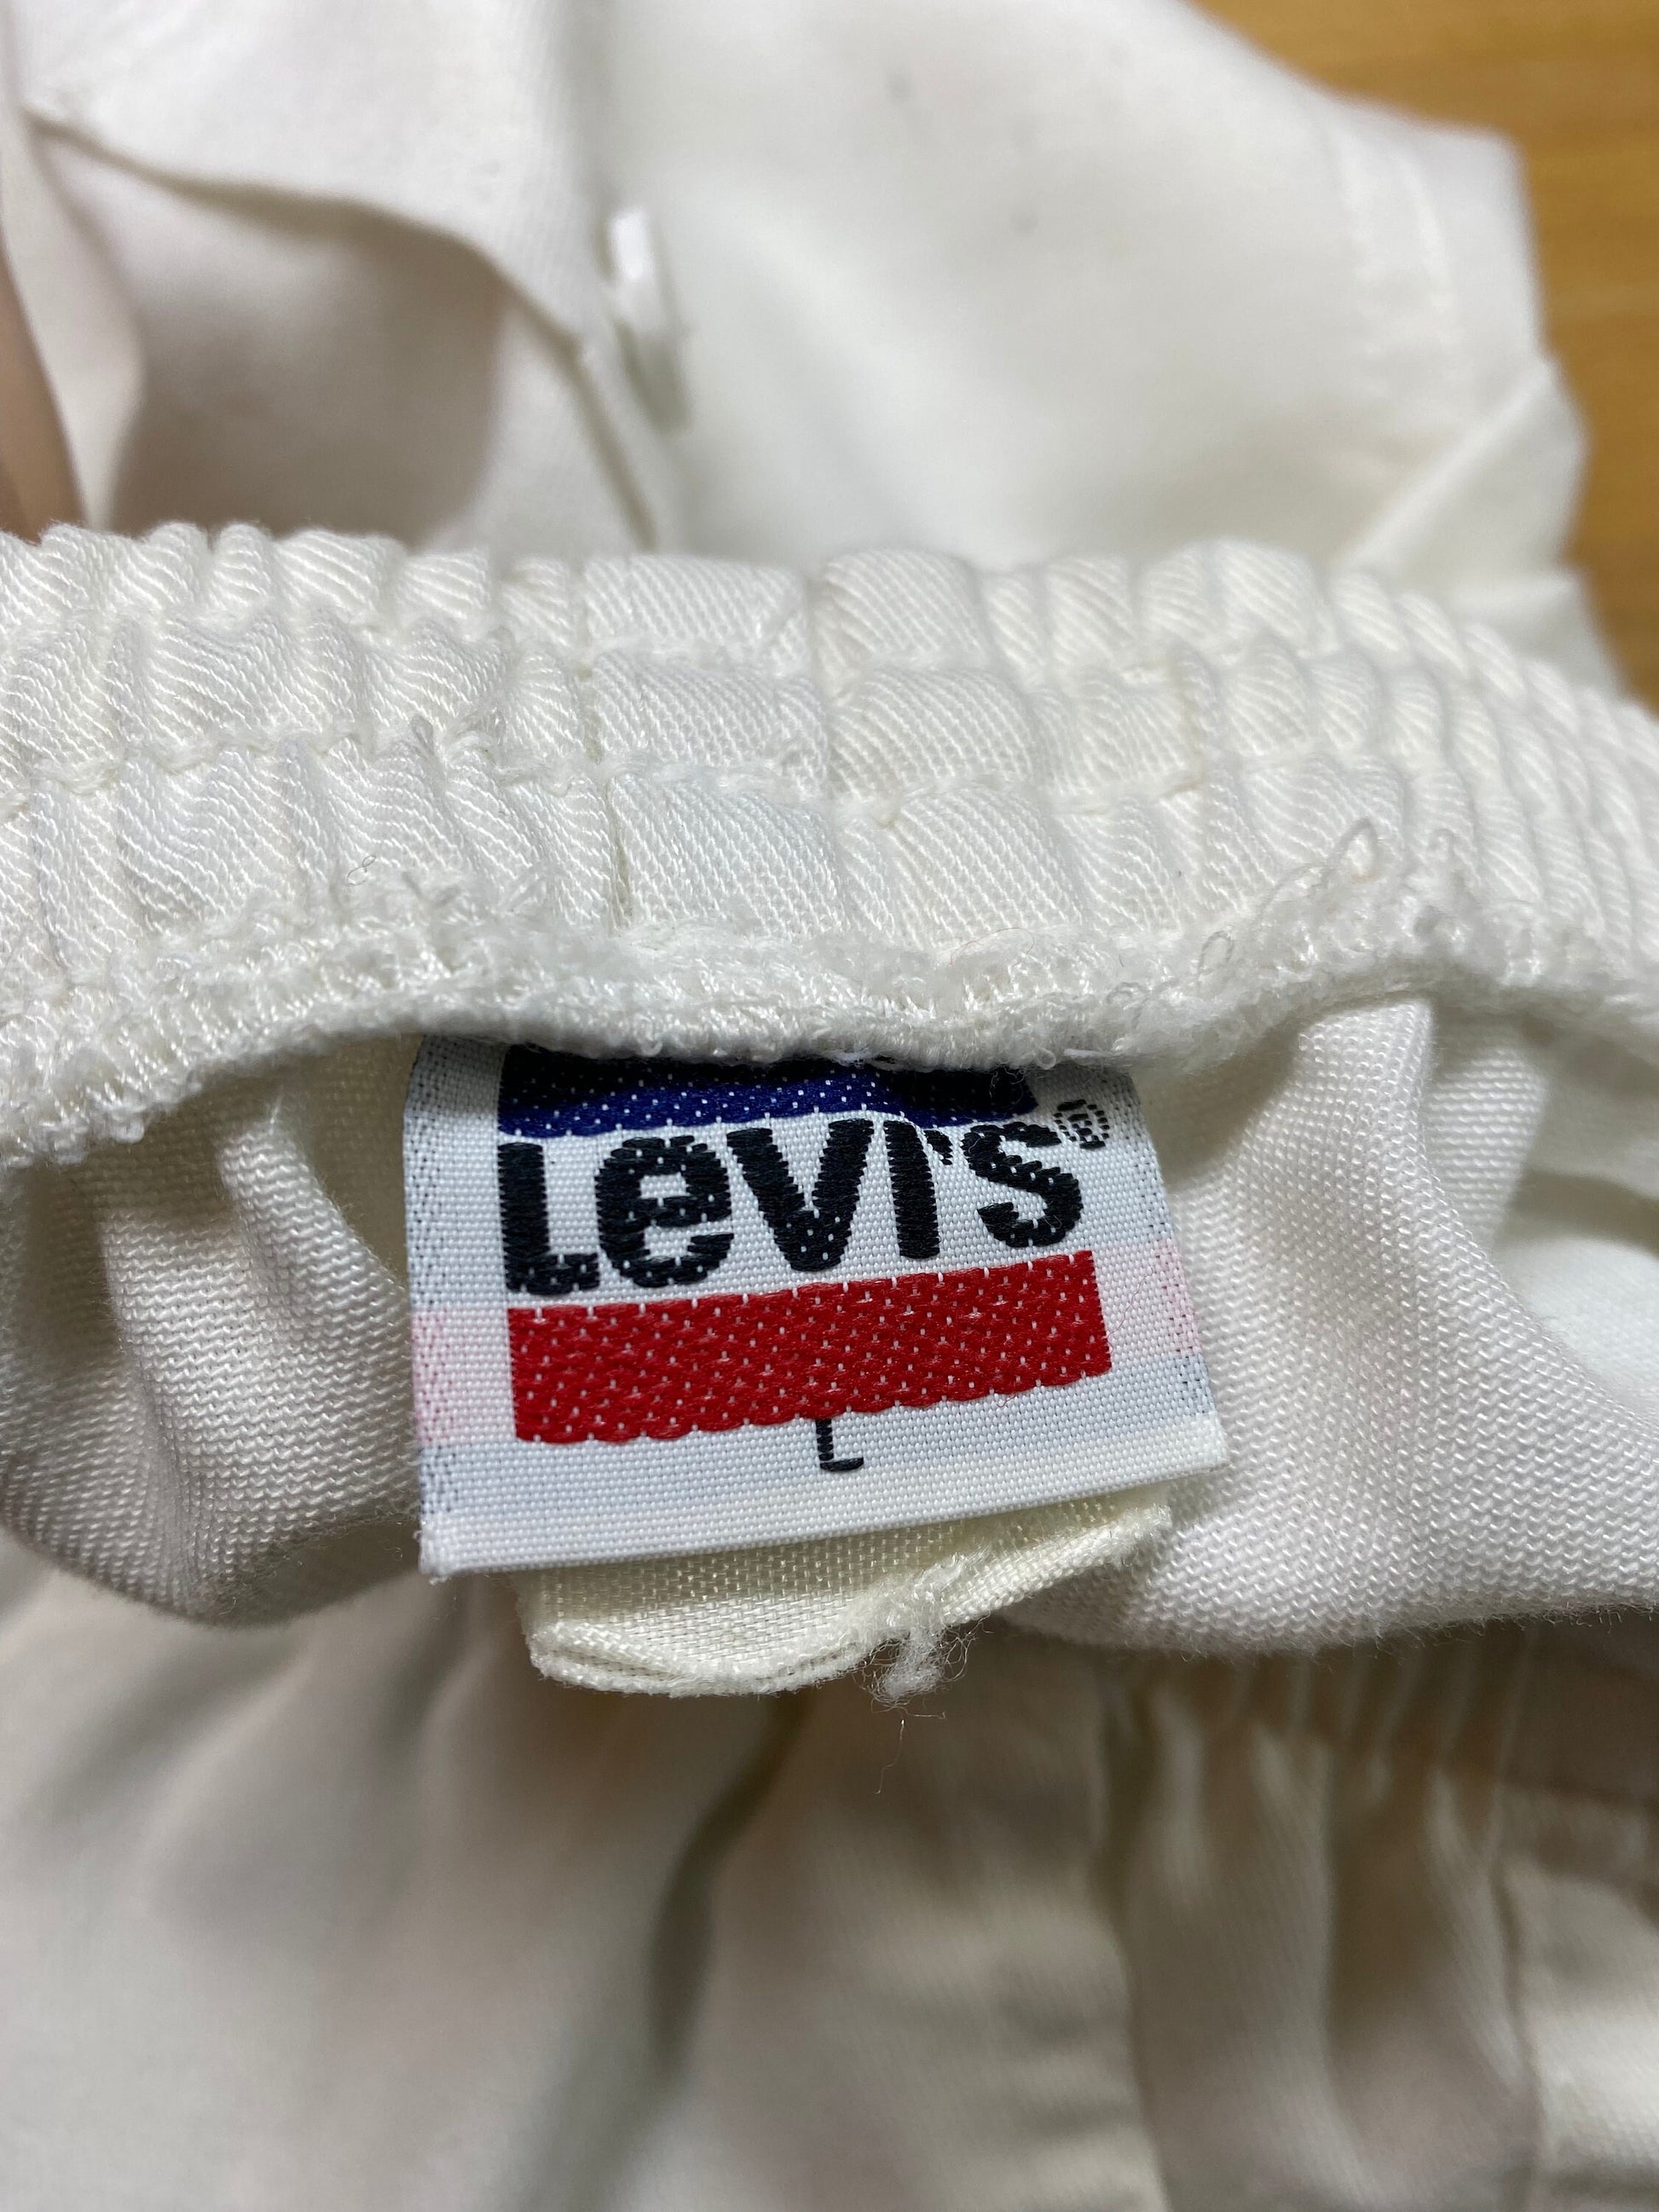 1984 Levi's LA Olympics Uniform Pants - Medium to Large 